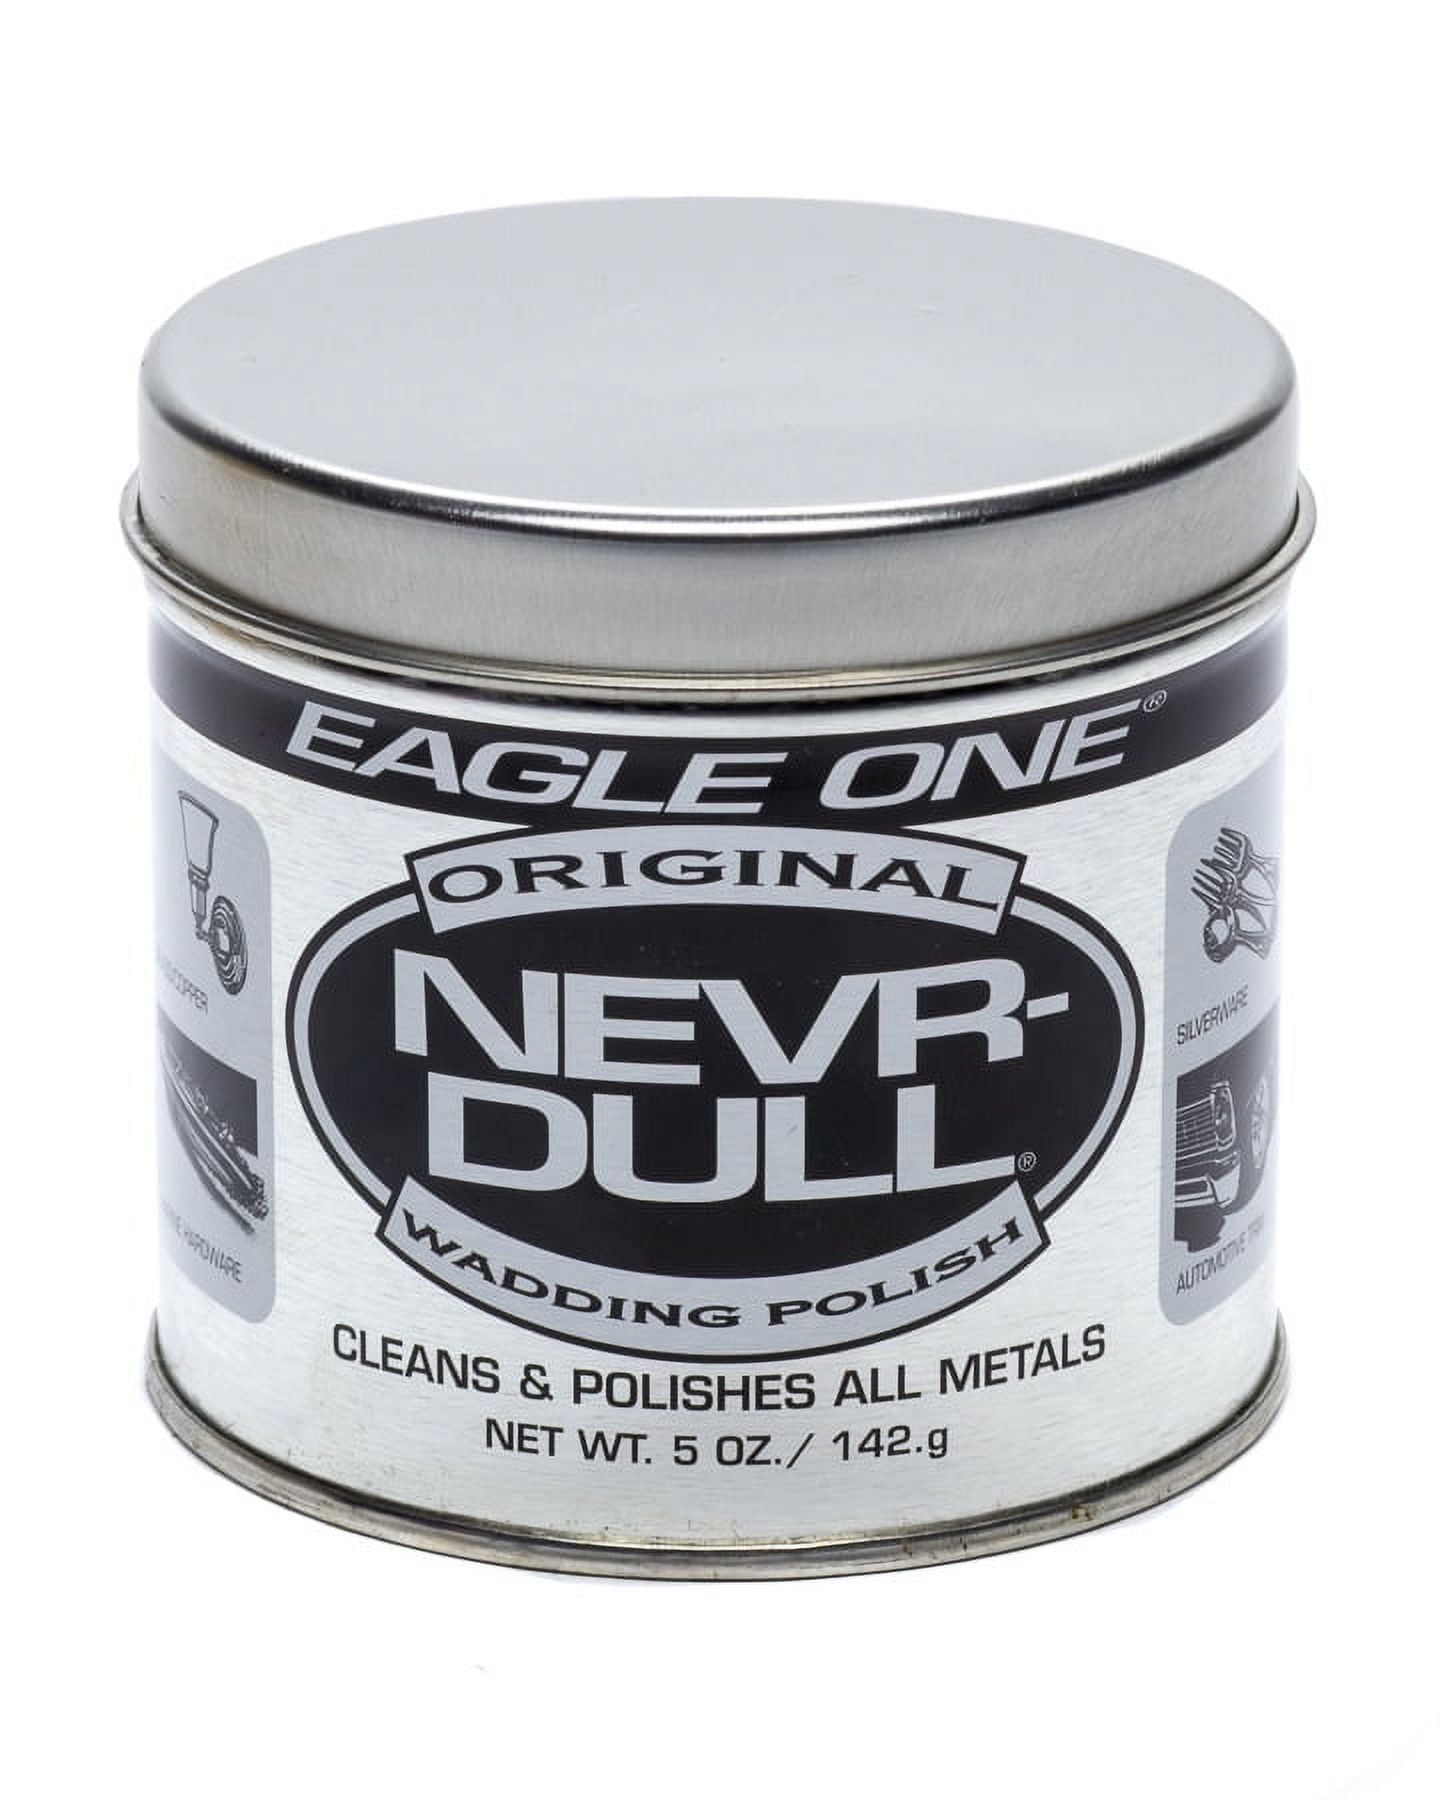 Eagle One Nevr-Dull All Metal Polish, 142-g